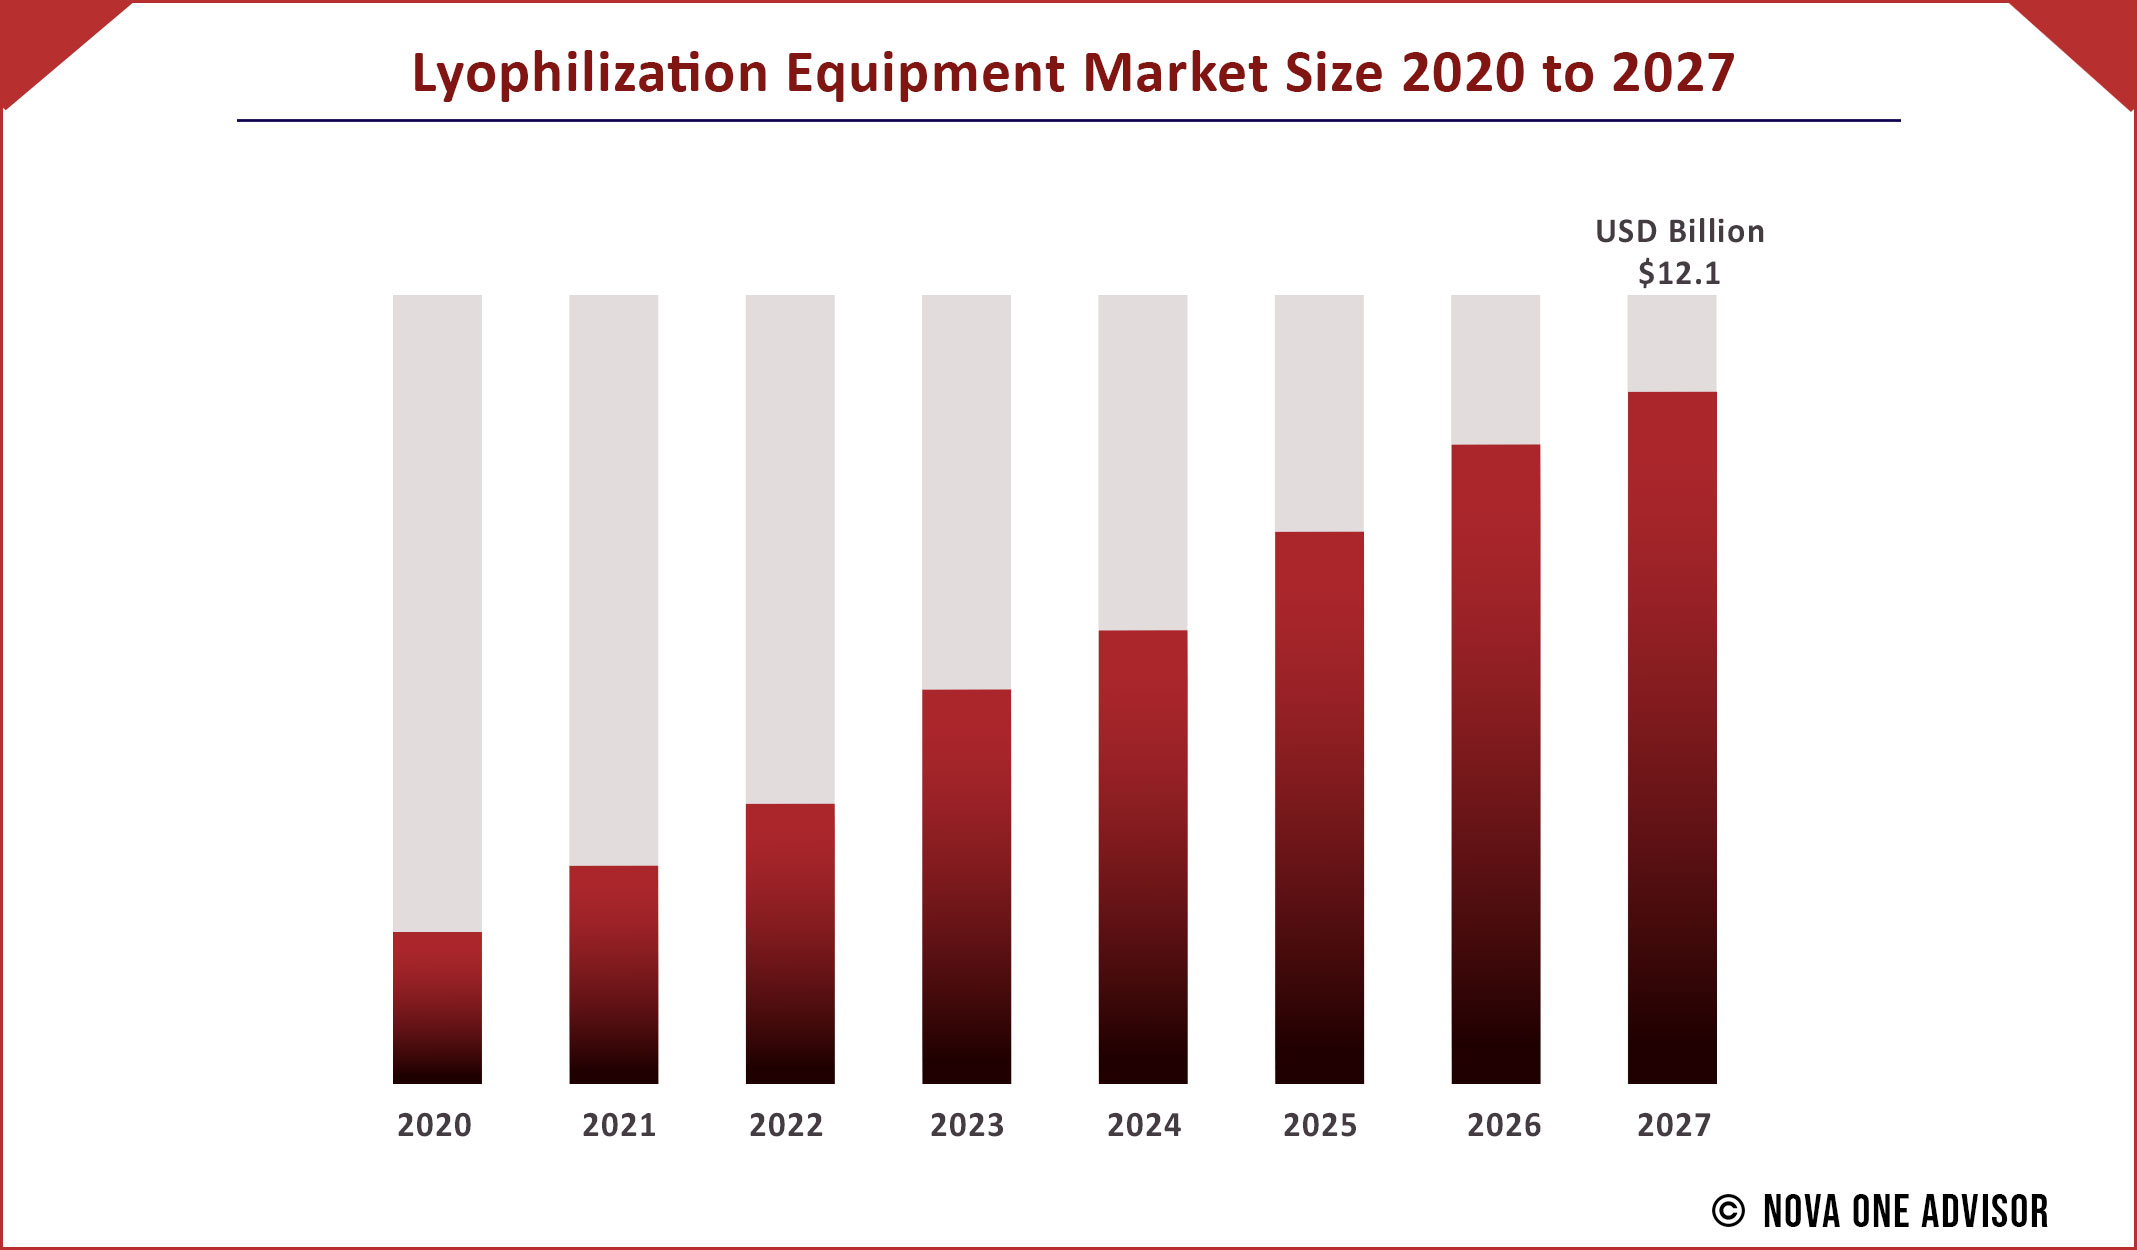 Lyophilization Equipment Market Size 2020 to 2027